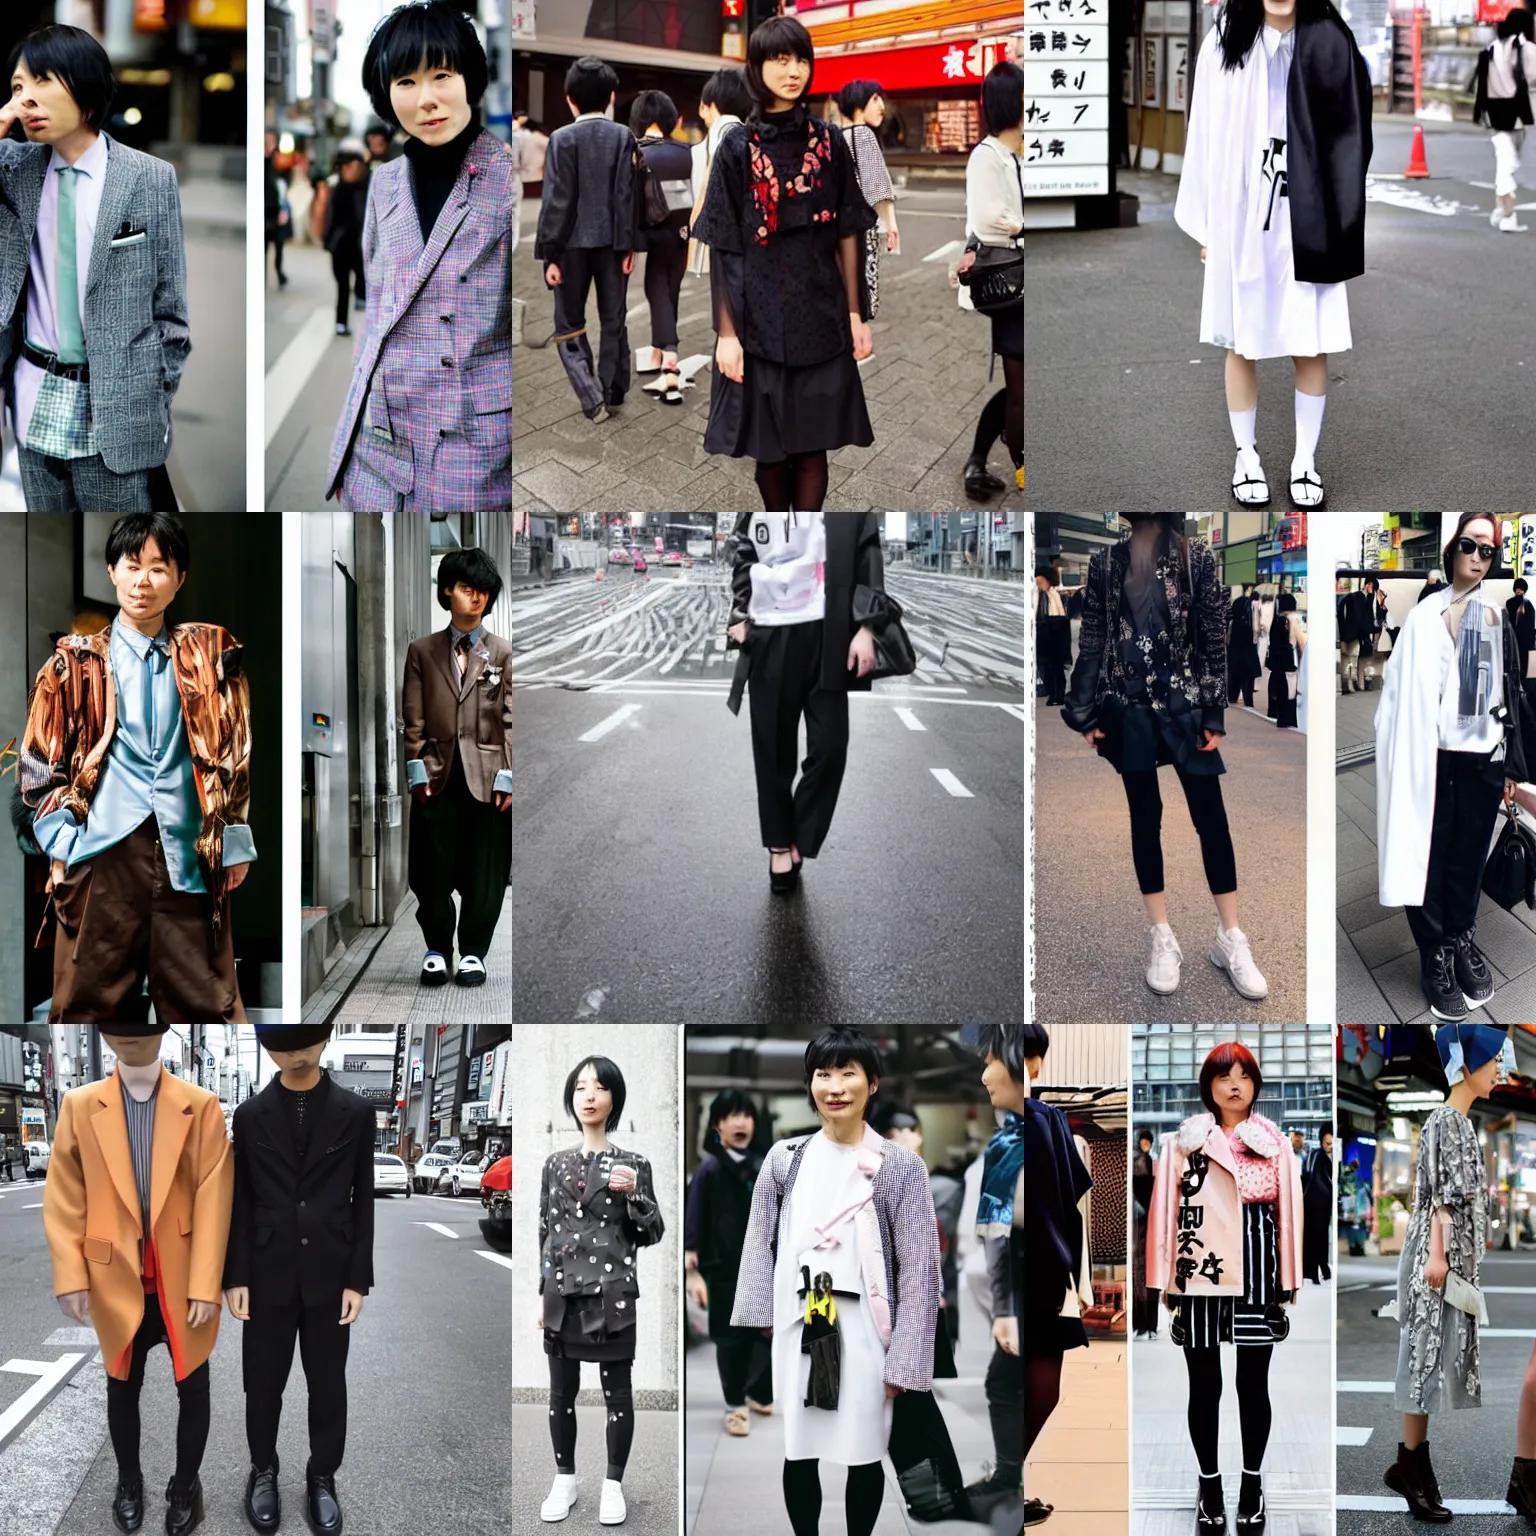 Prompt: tokyo fashion